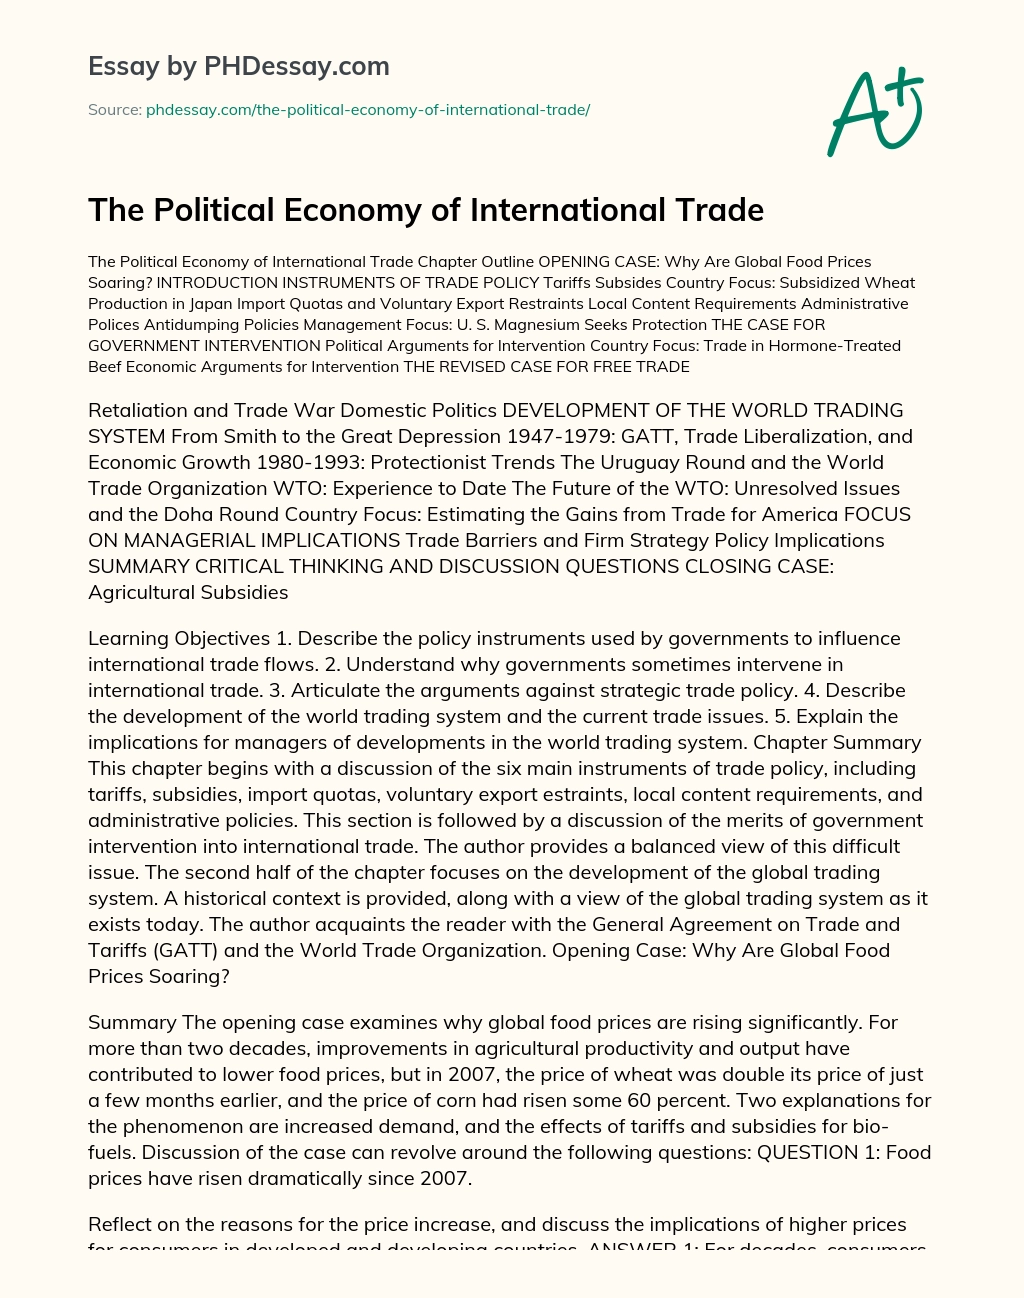 The Political Economy of International Trade essay